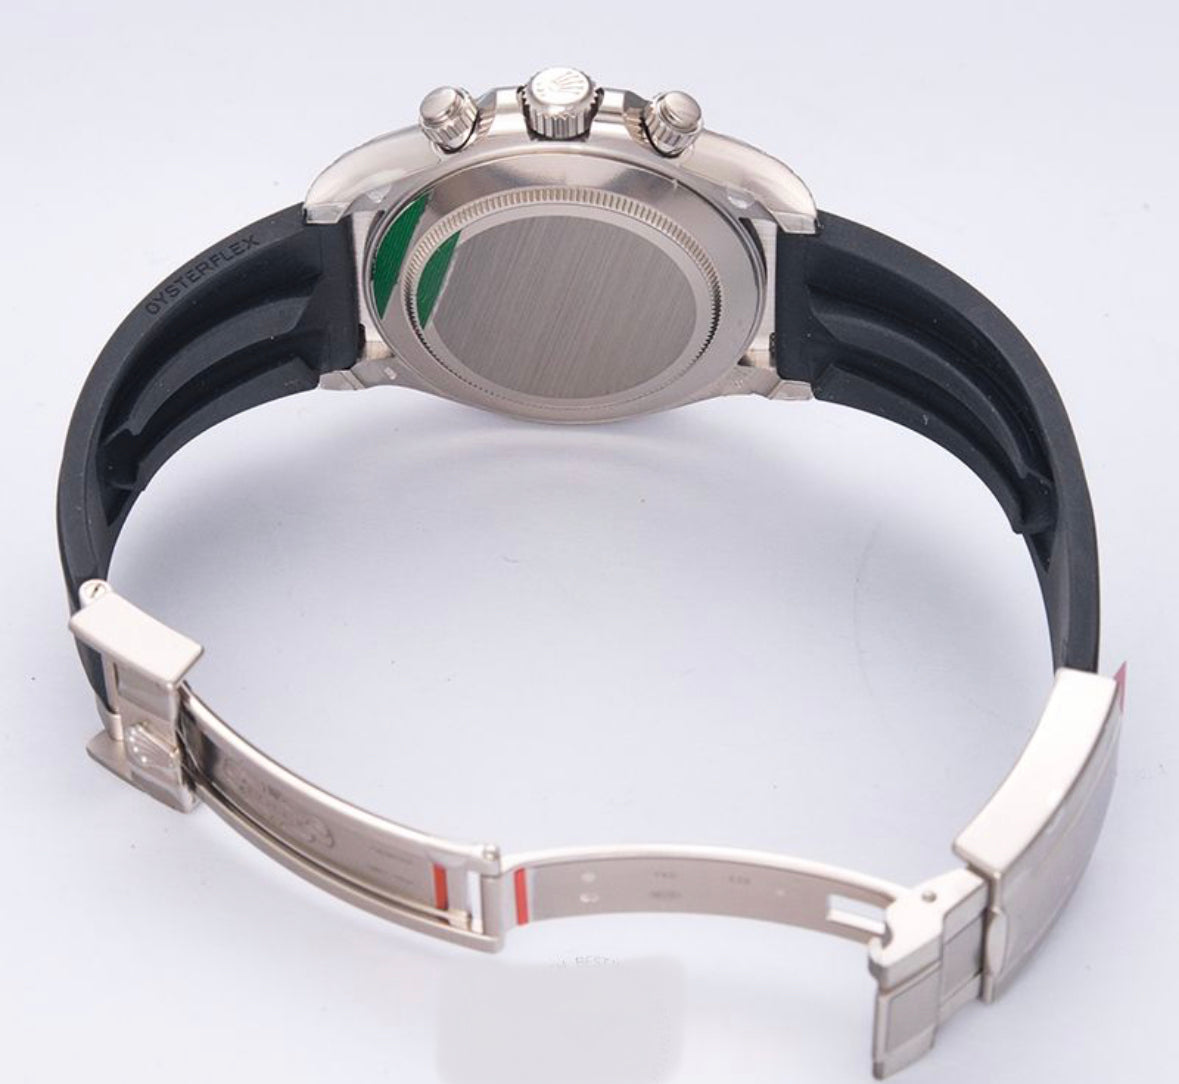 Replica Rolex Cosmograph Daytona 18ct White Gold Automatic Black Dial Diamonds Mens Watch - IP Empire Replica Watches